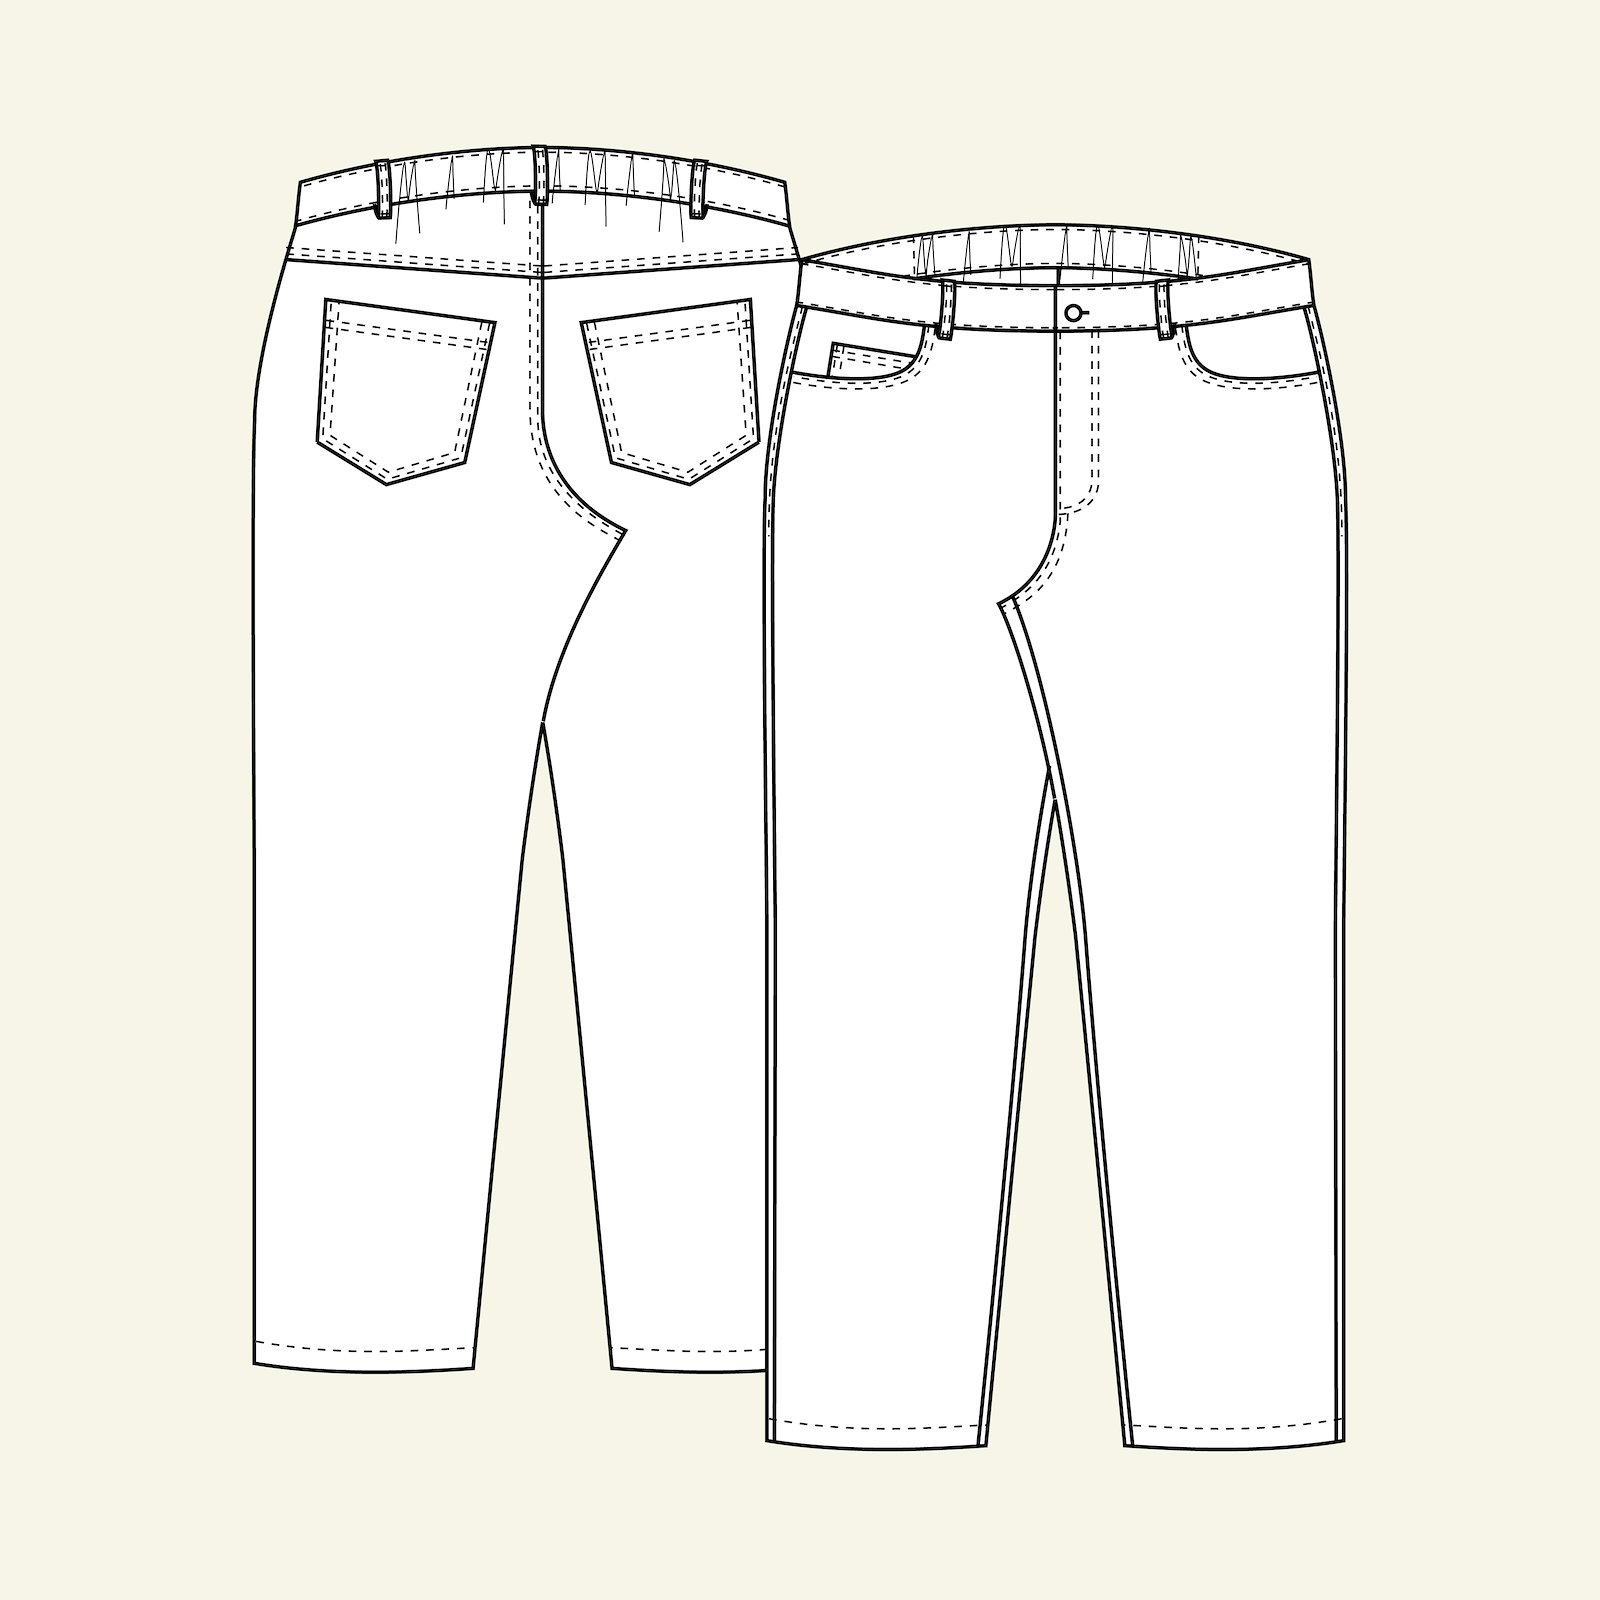 Classic jeans w. elastic waistban, 56/28 p70007000_p70007001_p70007002_p70007003_p70007004_pack_b